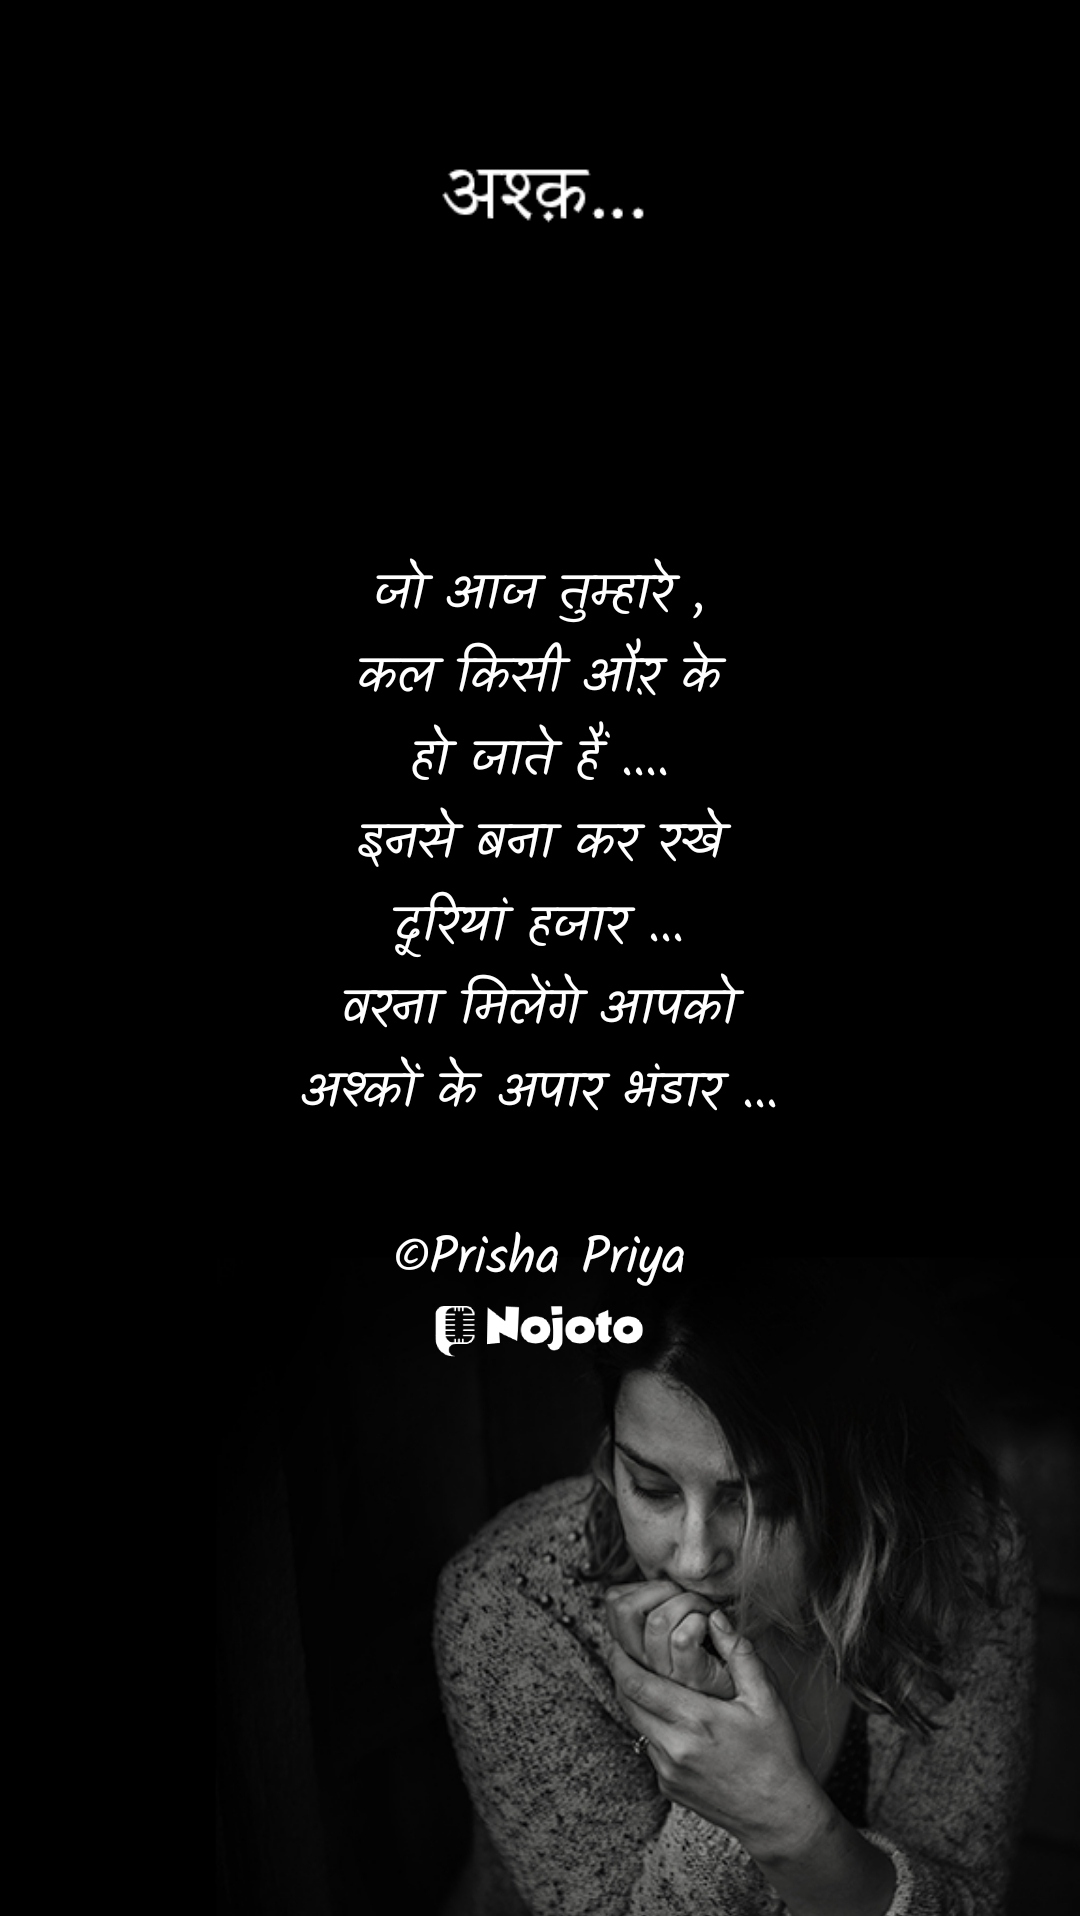 #nojotohindi #nojotoquotes #Trending #feelings #SAD #hindiwriters #hindiwriting #prishapriyaquotes #Life 

#ashq